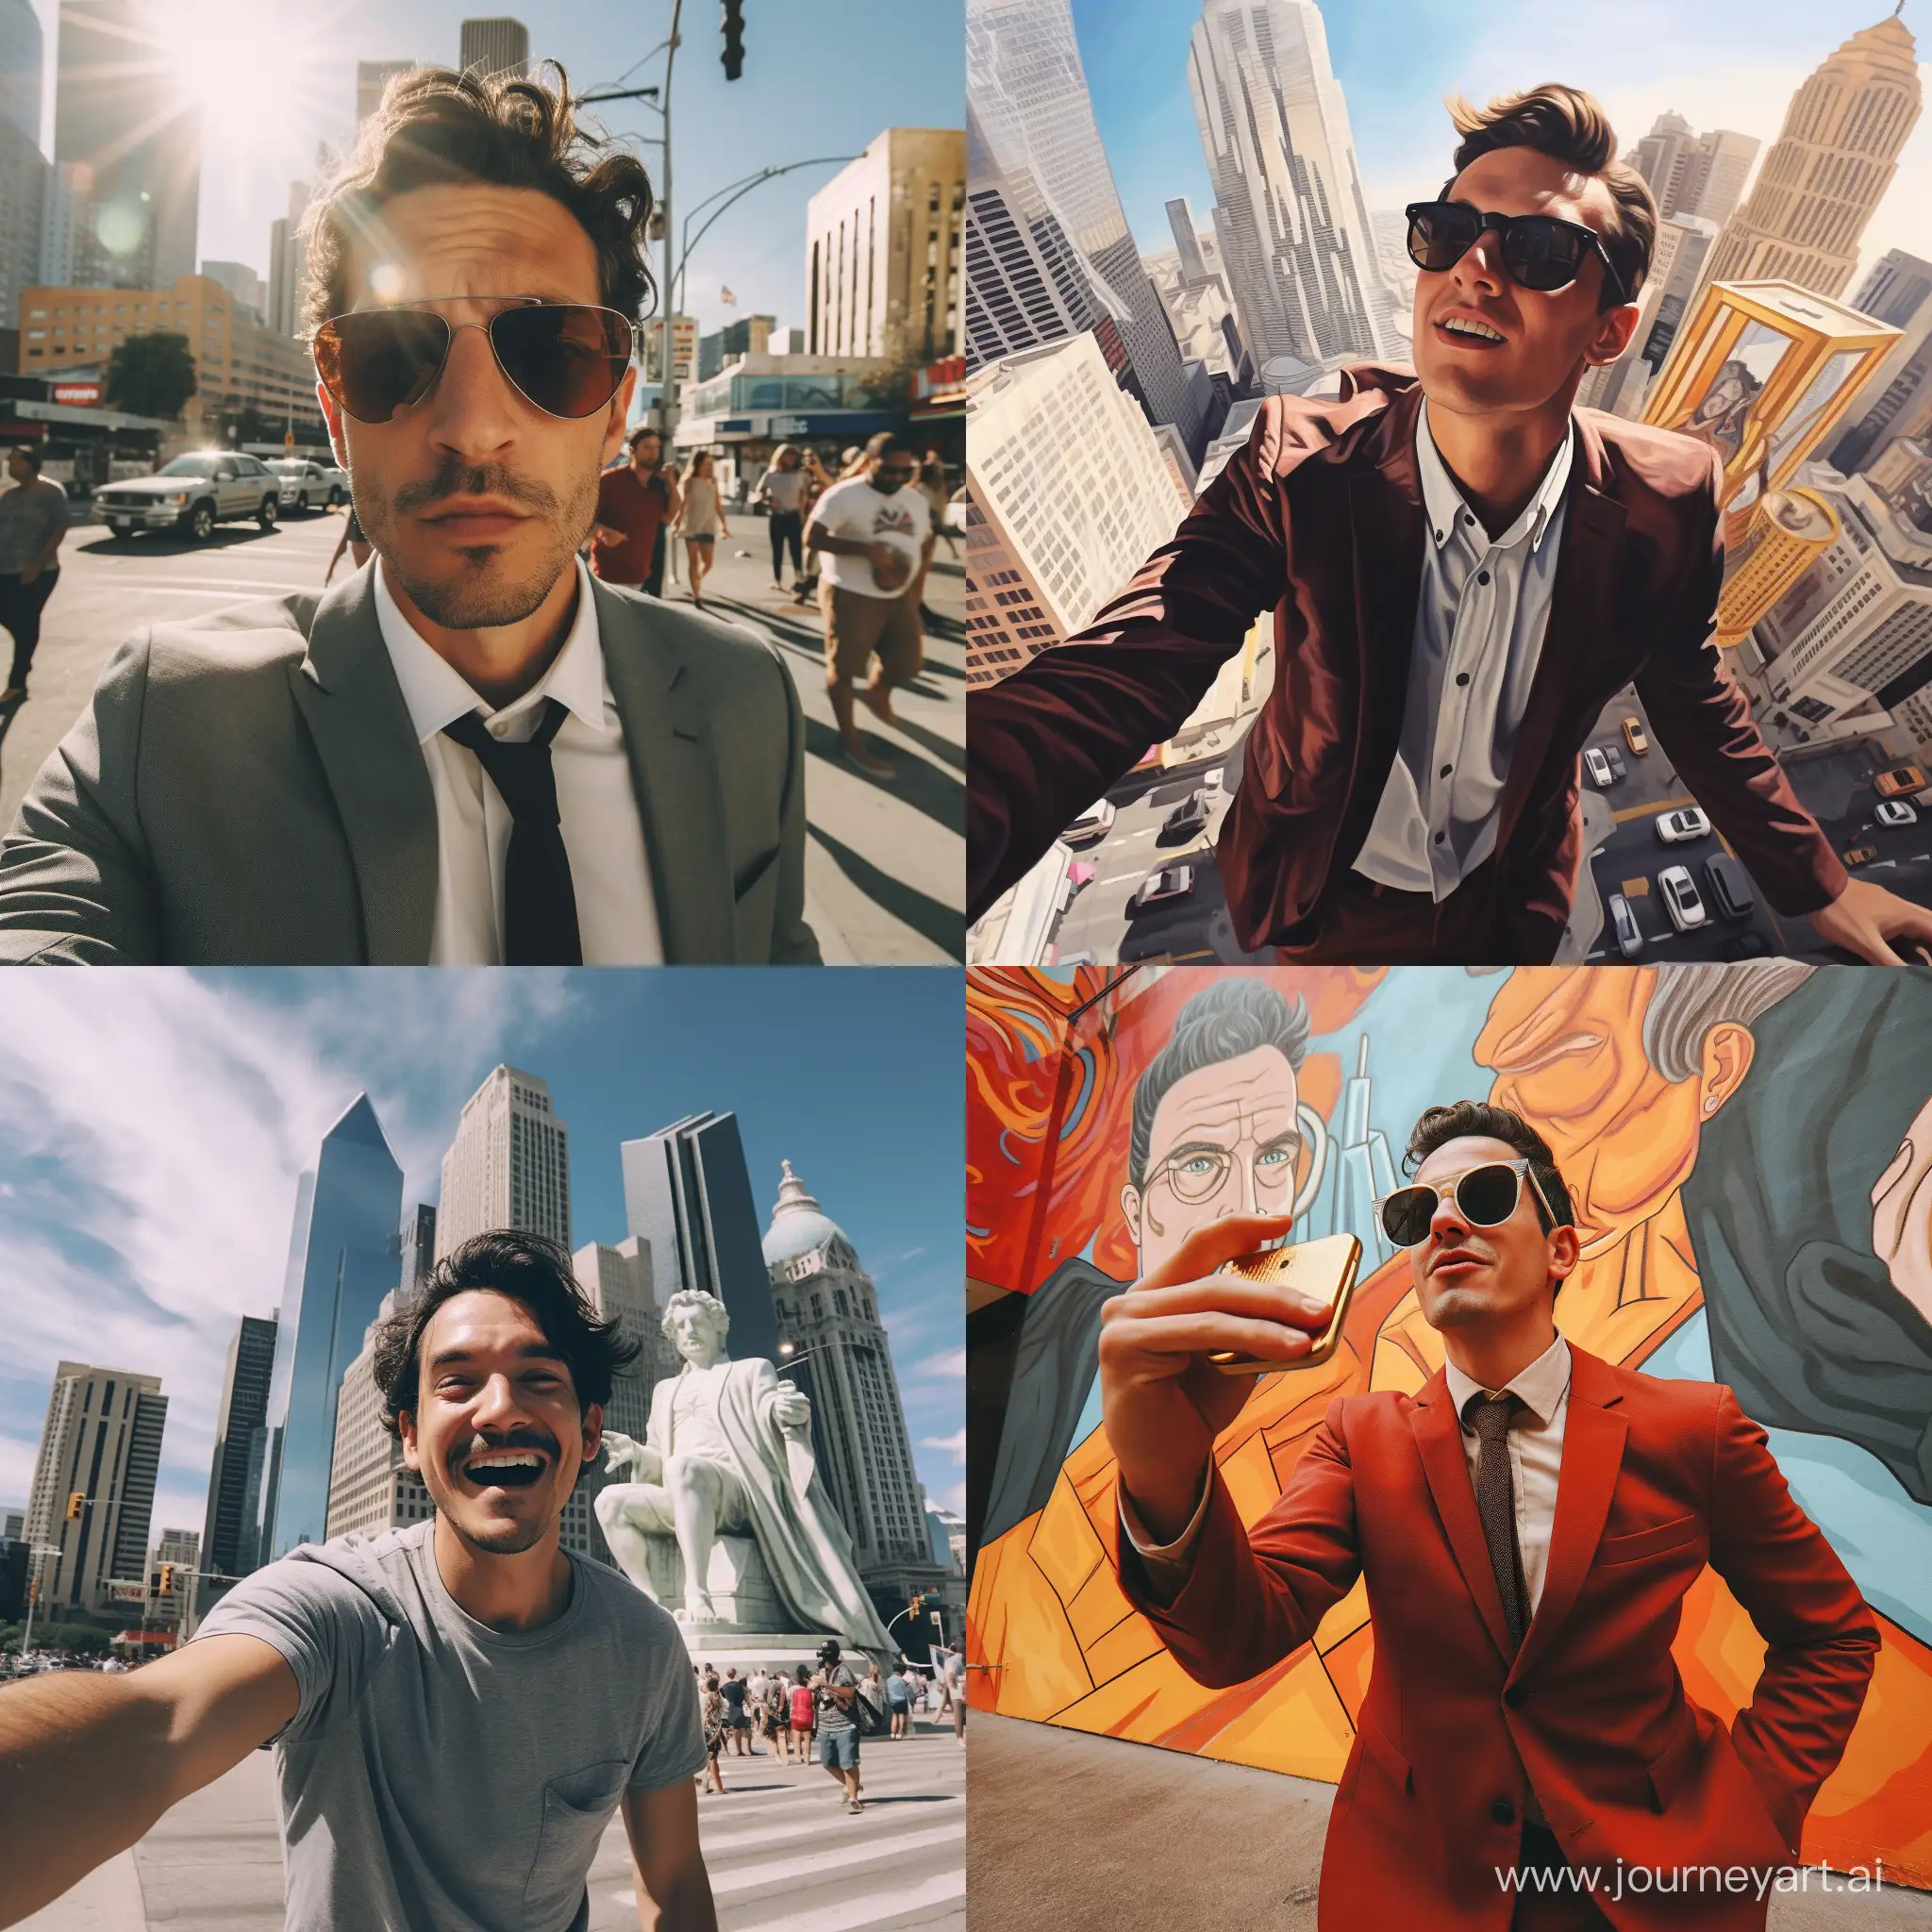 Los-Angeles-Selfie-Man-in-11-Aspect-Ratio-Urban-Portrait-Photography